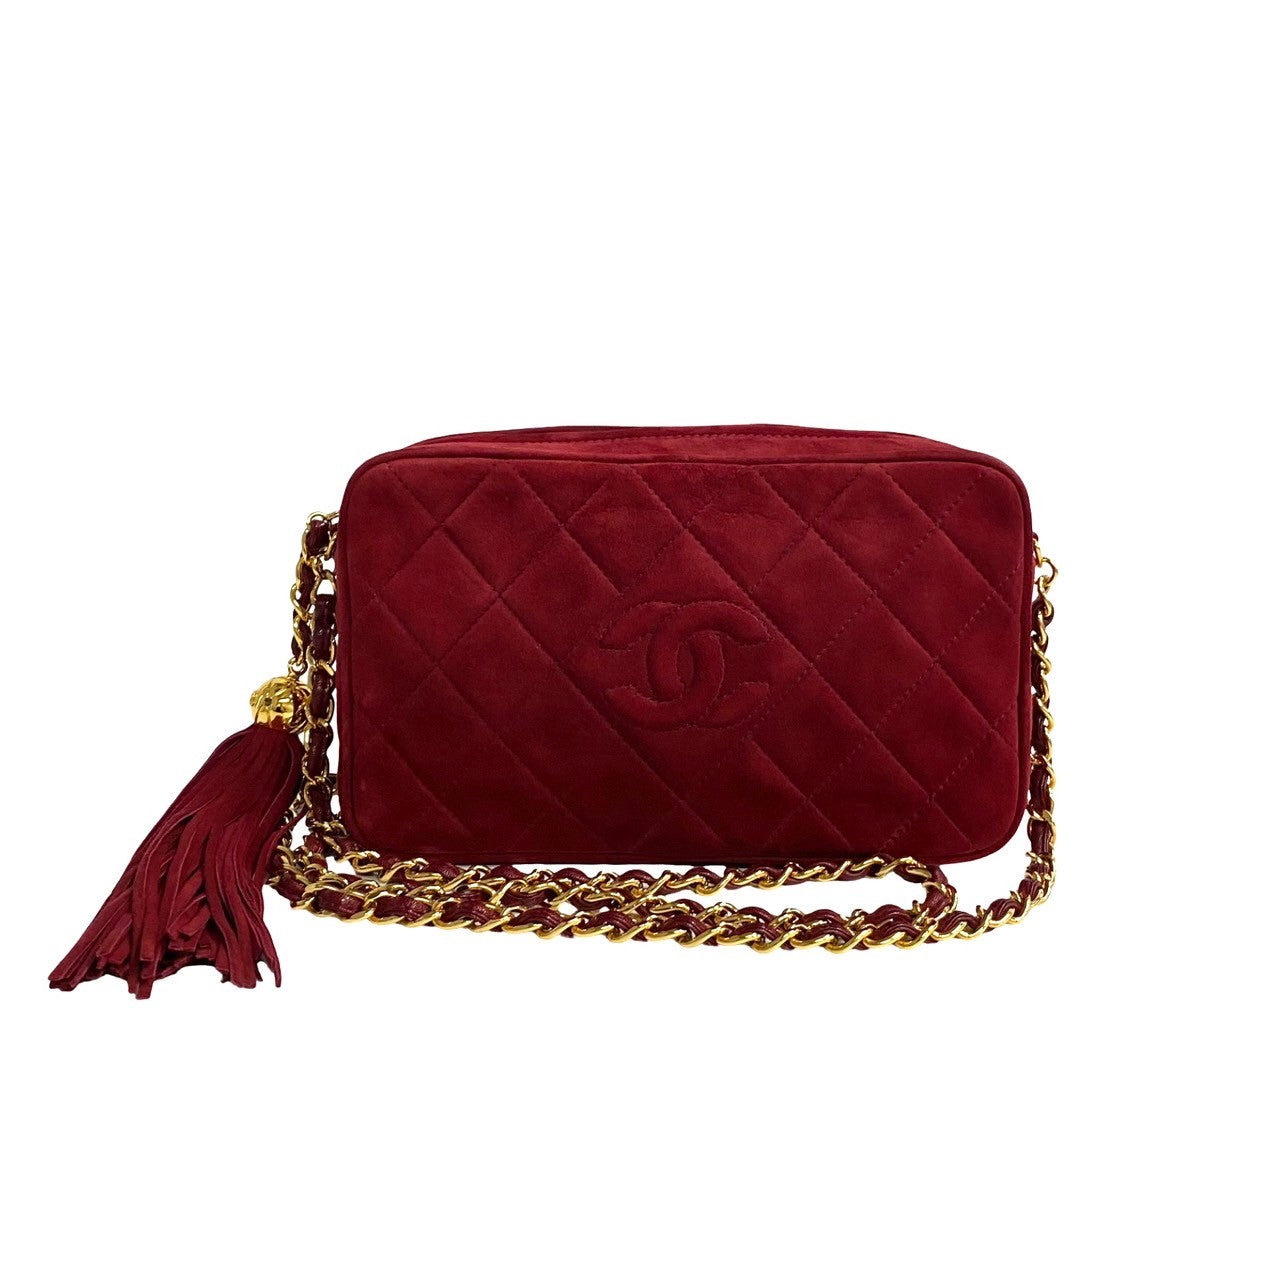 Chanel Matelasse Coco Suede Leather Tassel Chain Shoulder Bag Suede Shoulder Bag 51713 in Excellent condition